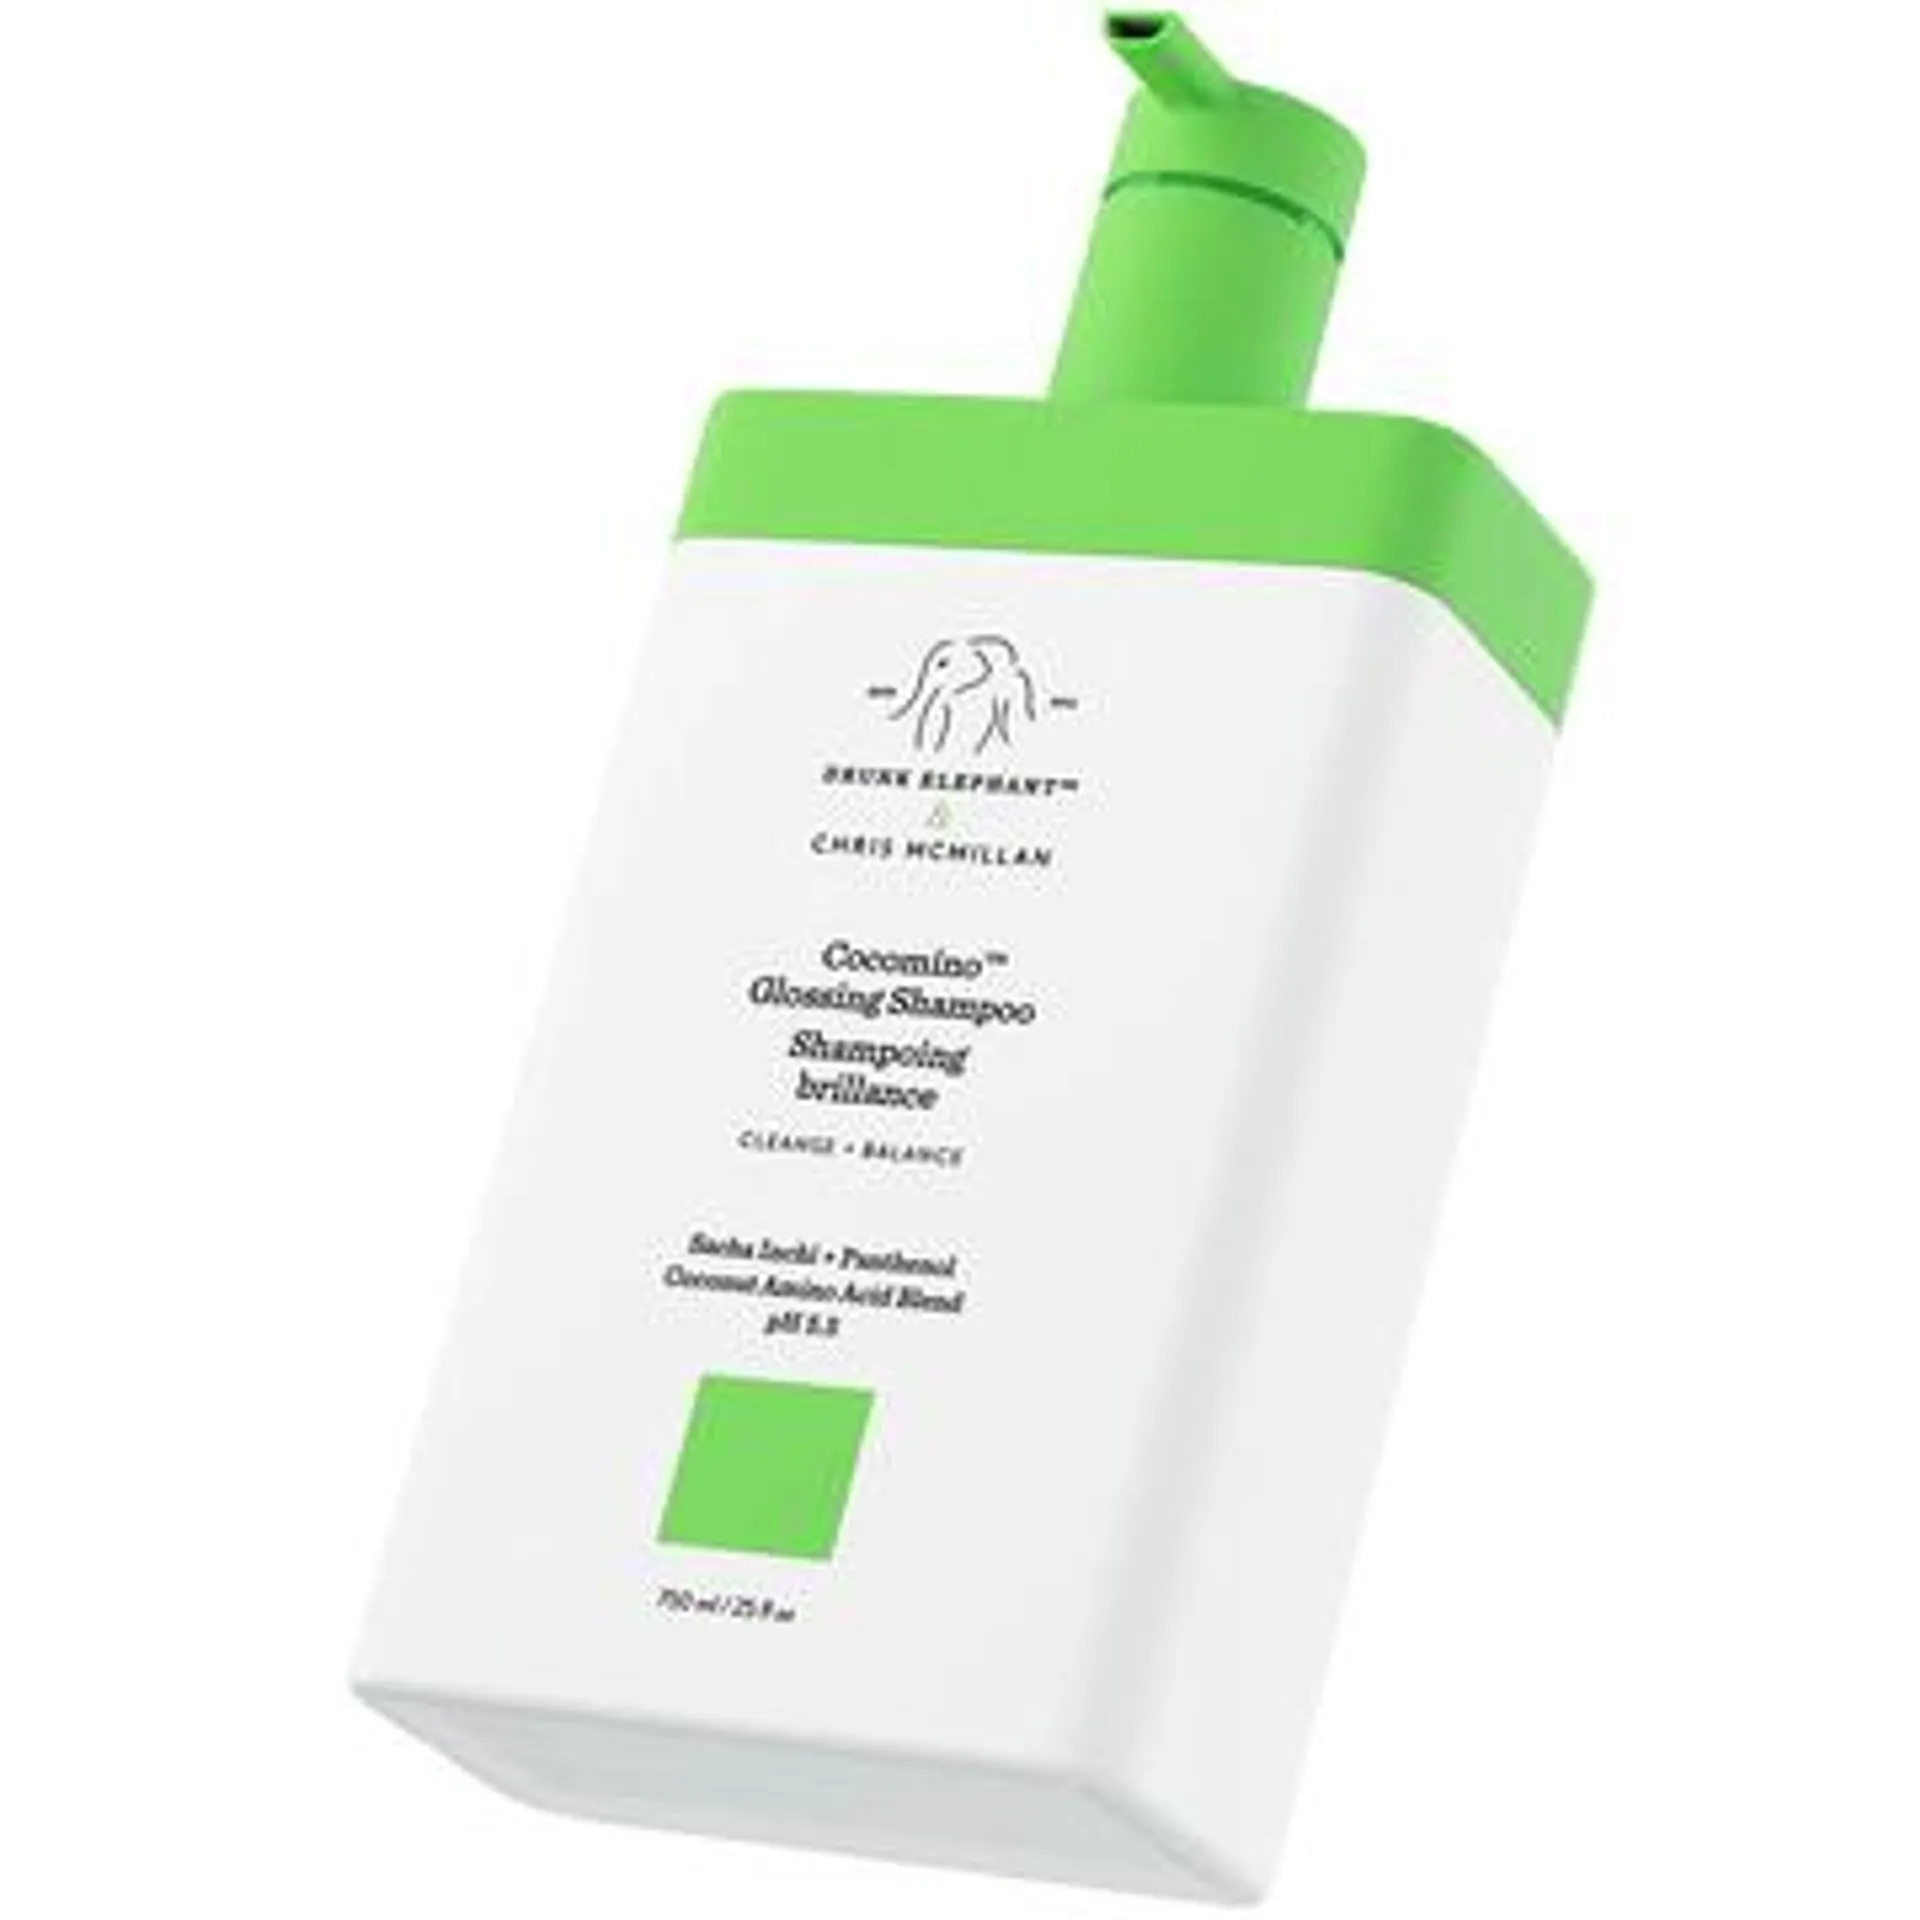 Cocomino™ Glossing Shampoo - Big